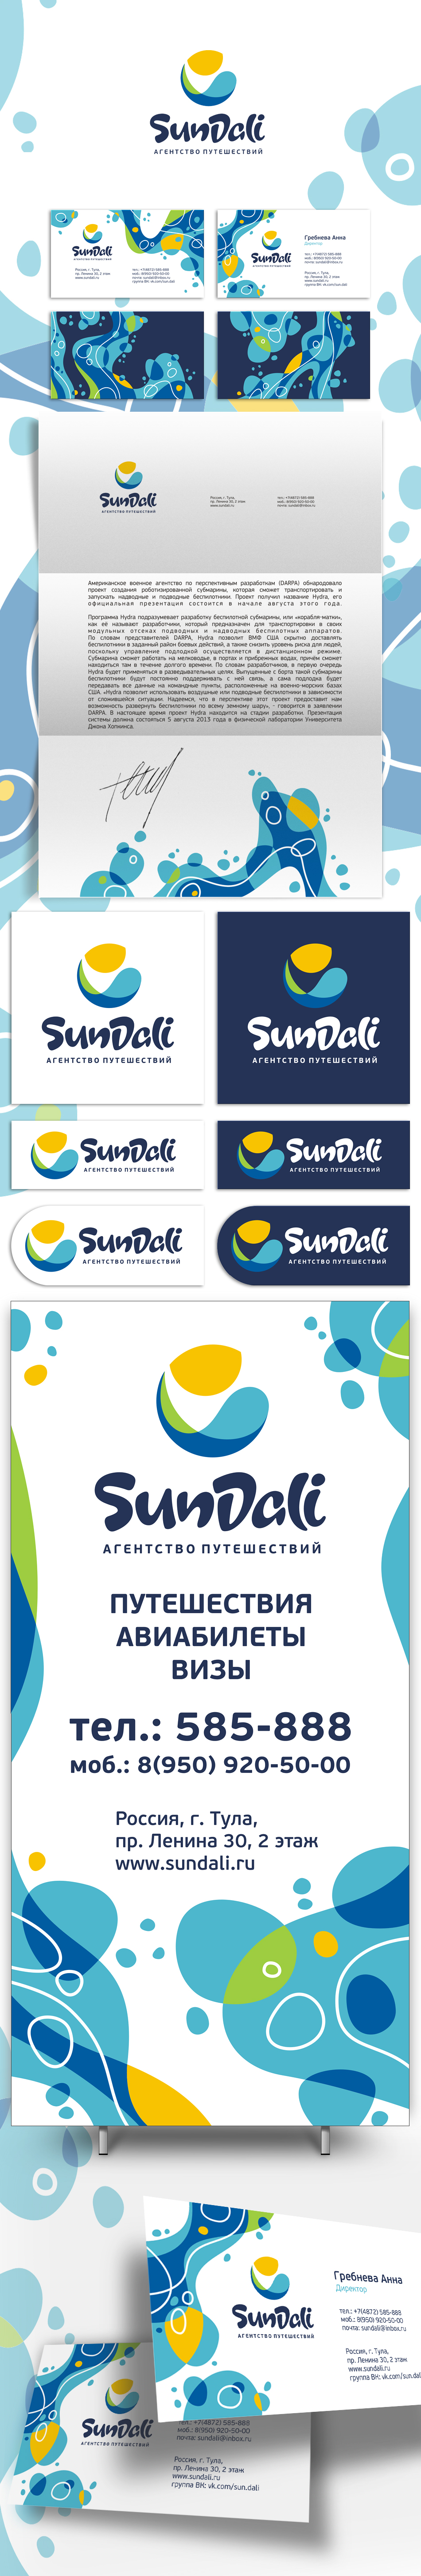 Логотип и фирменный стиль туристического агентства SunDali